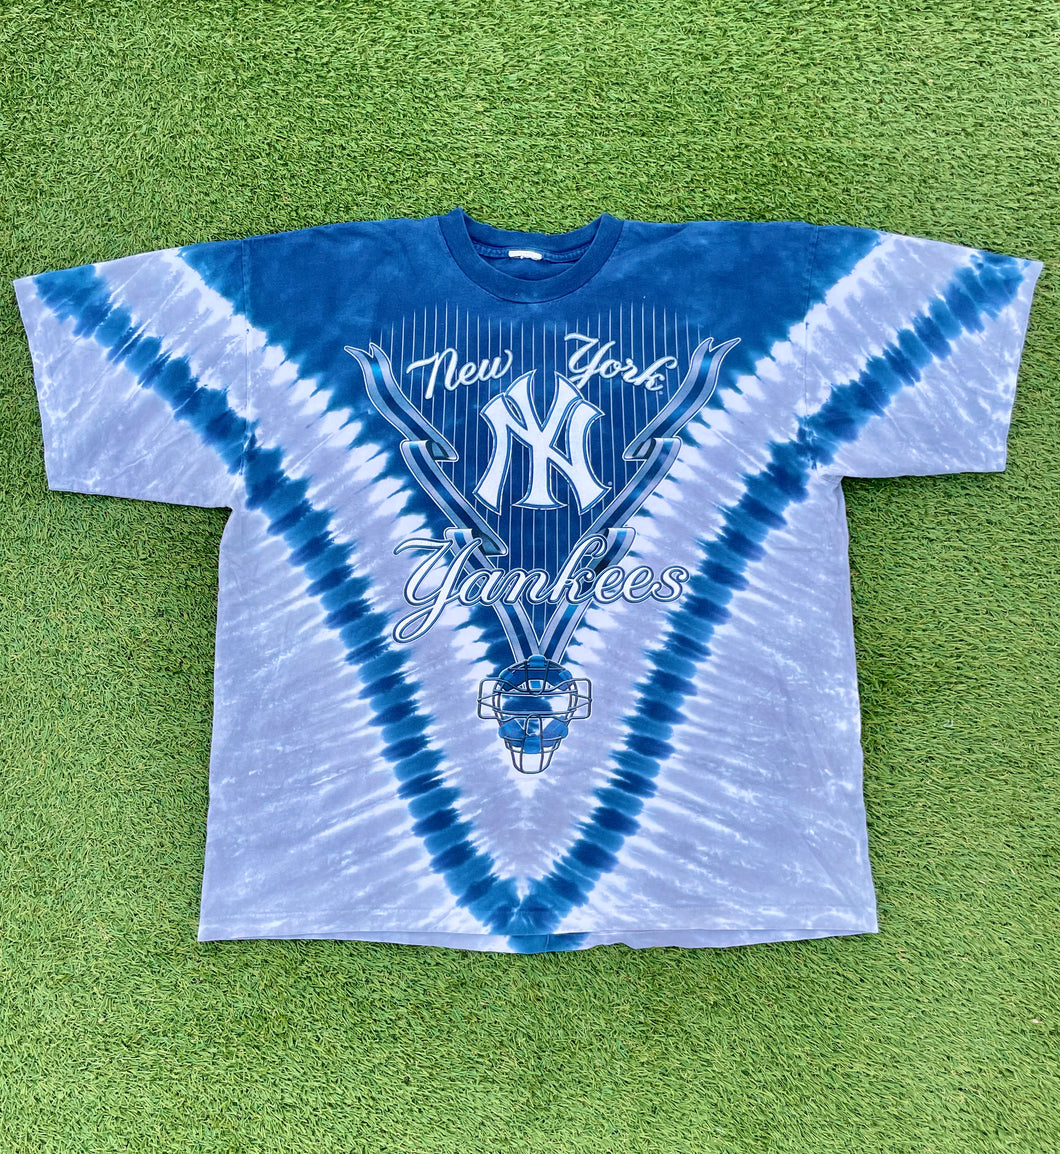 Vintage Majestic New York Yankees Tie Dye T Shirt – Vino Club Vintage